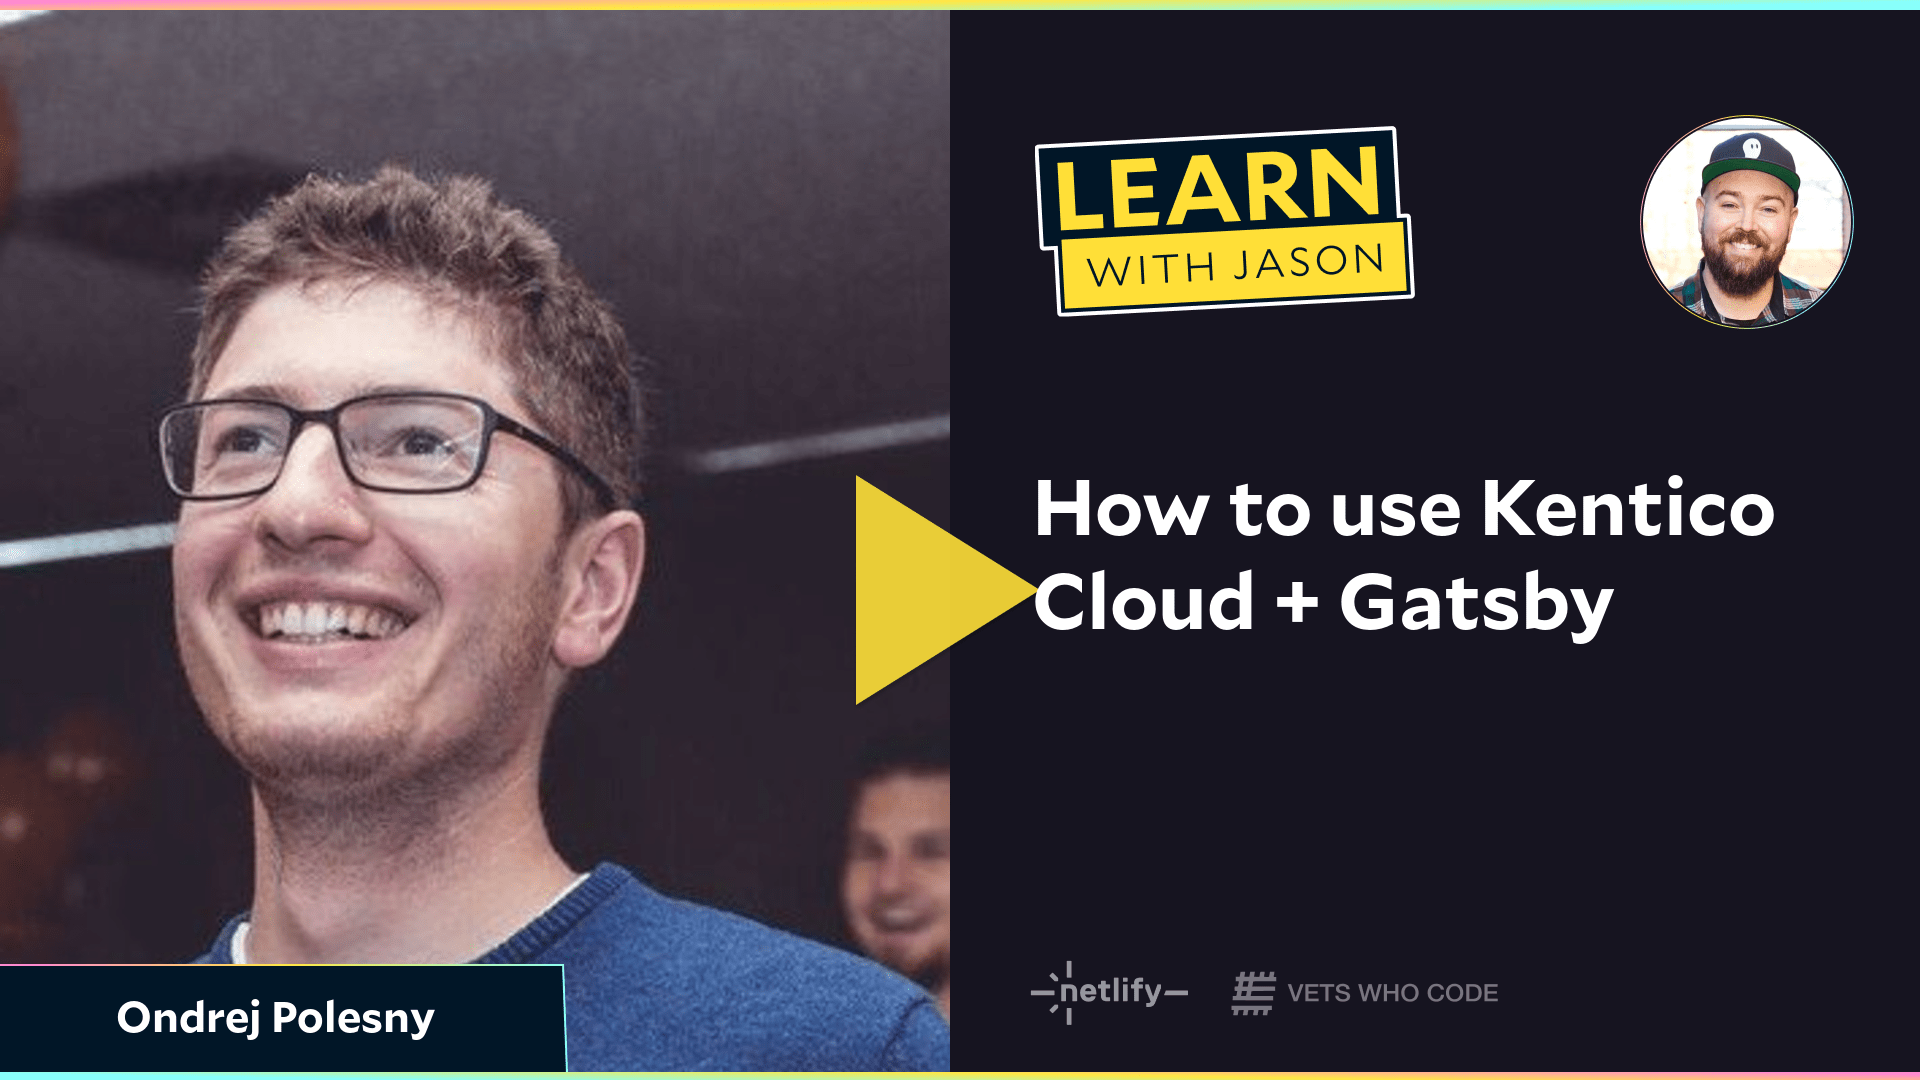 How to use Kentico Cloud + Gatsby (with Ondrej Polesny)